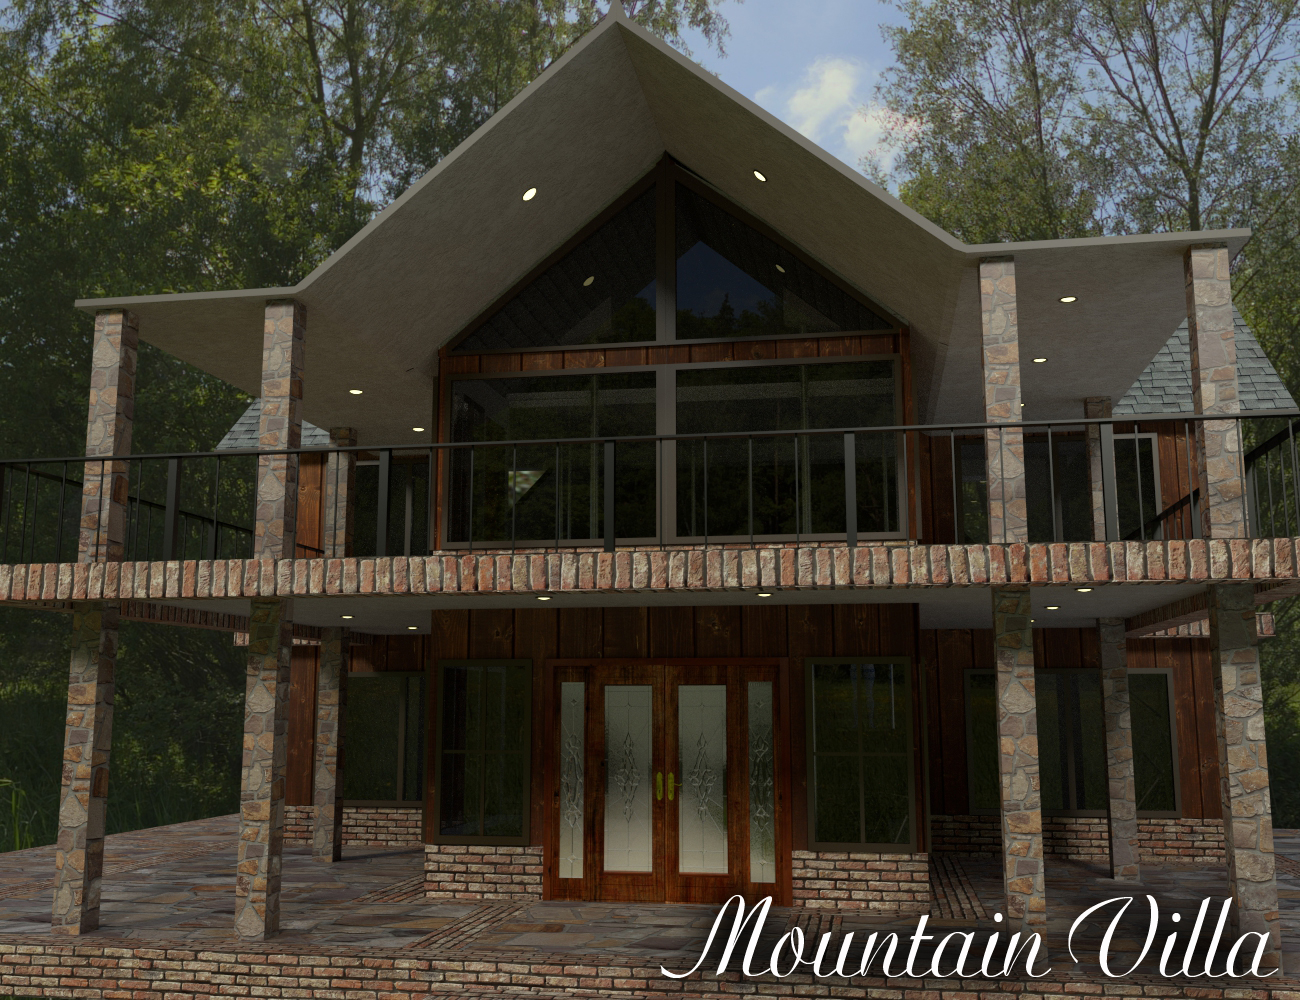 Mountain Villa by: ImagineX, 3D Models by Daz 3D